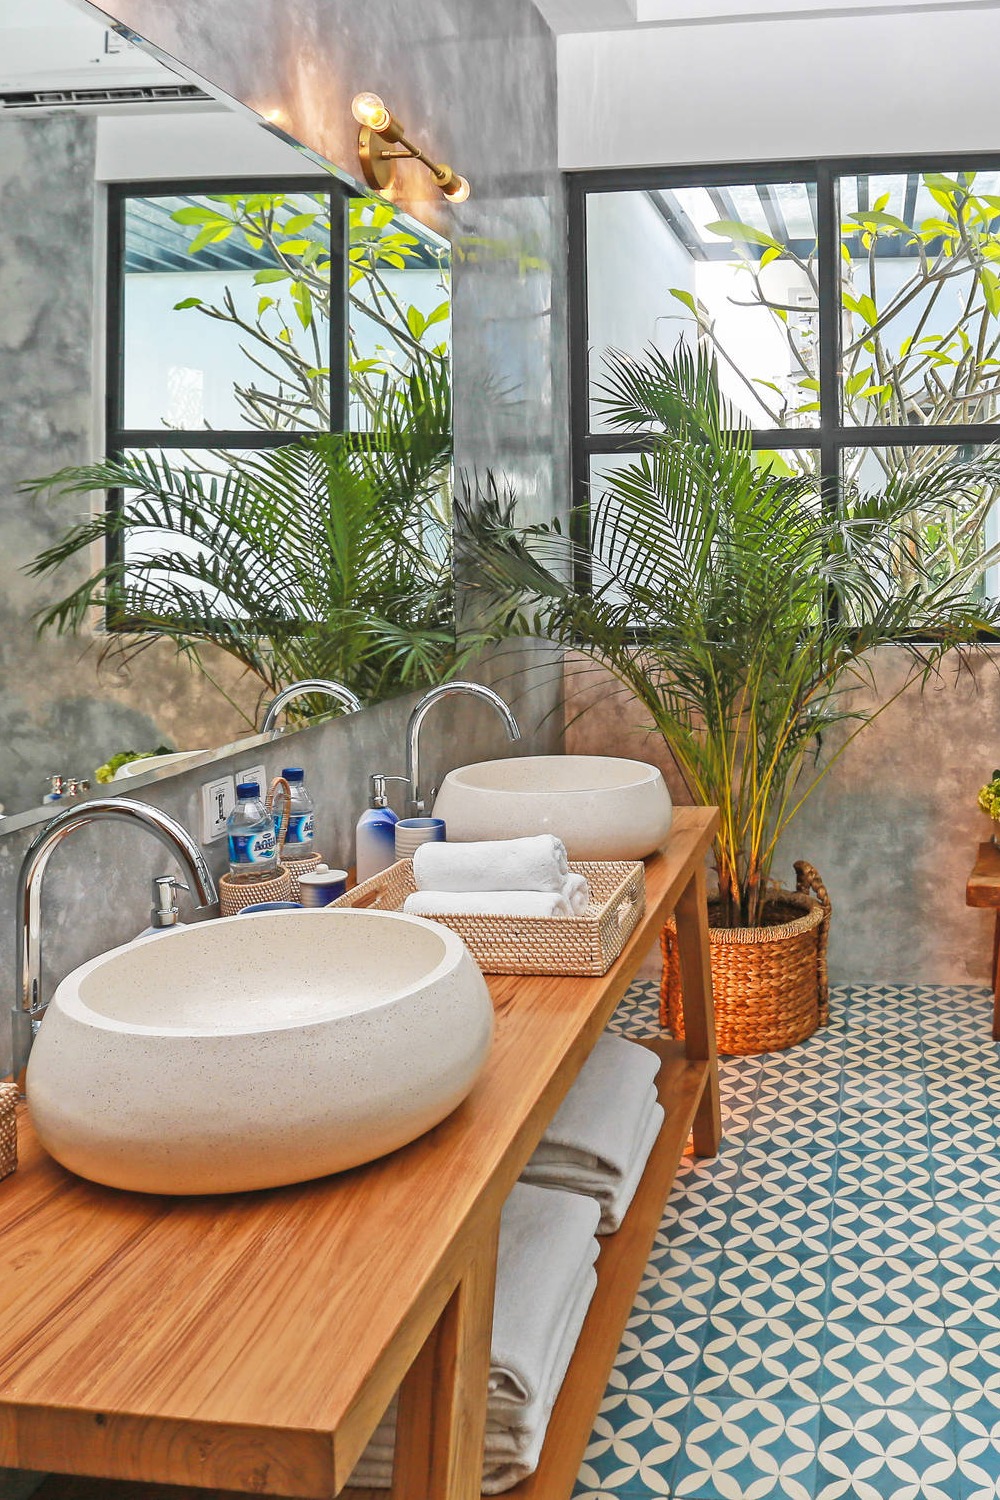 Tropical Bathroom Tropical Vanity Toilet Walls Plants Tiles Wallpaper Pink Tub Wall Bath Stone Wood Green Sink